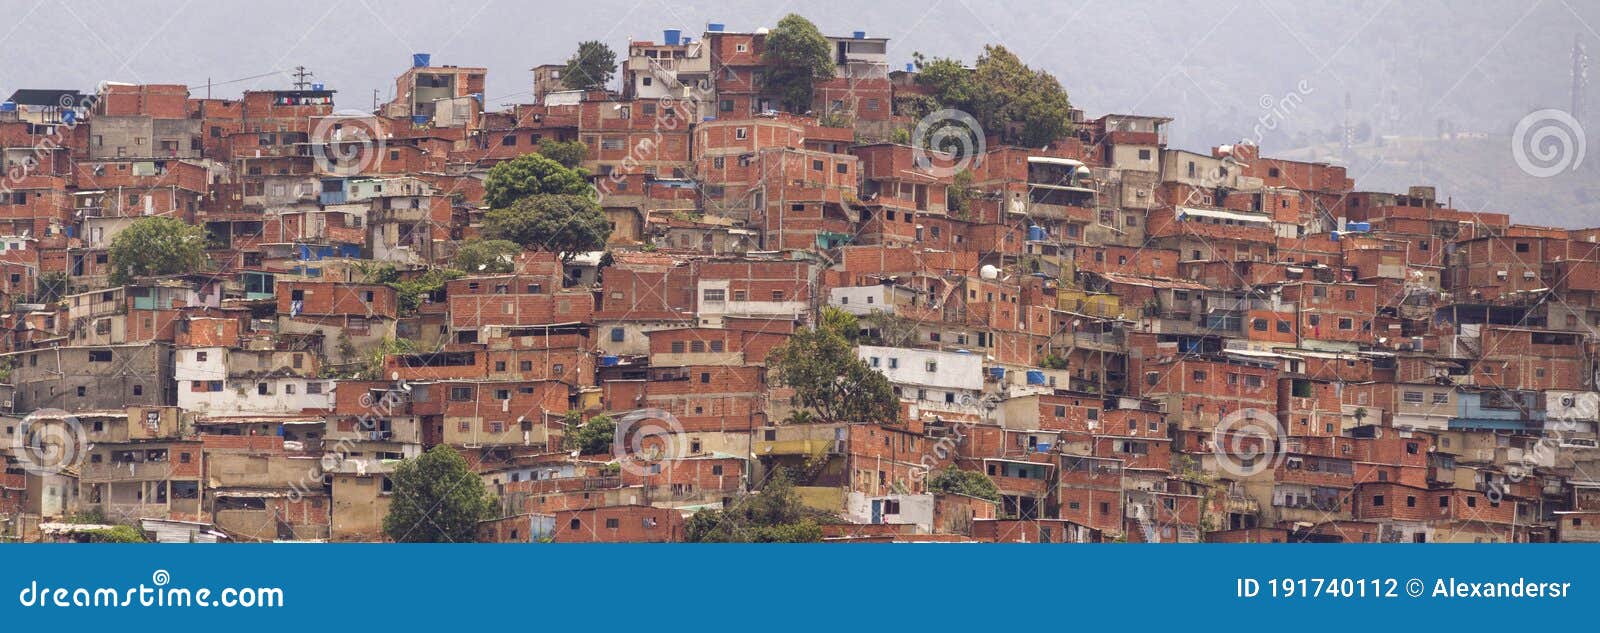 awesome view of artigas and moran slums in green hills caracas venezuela